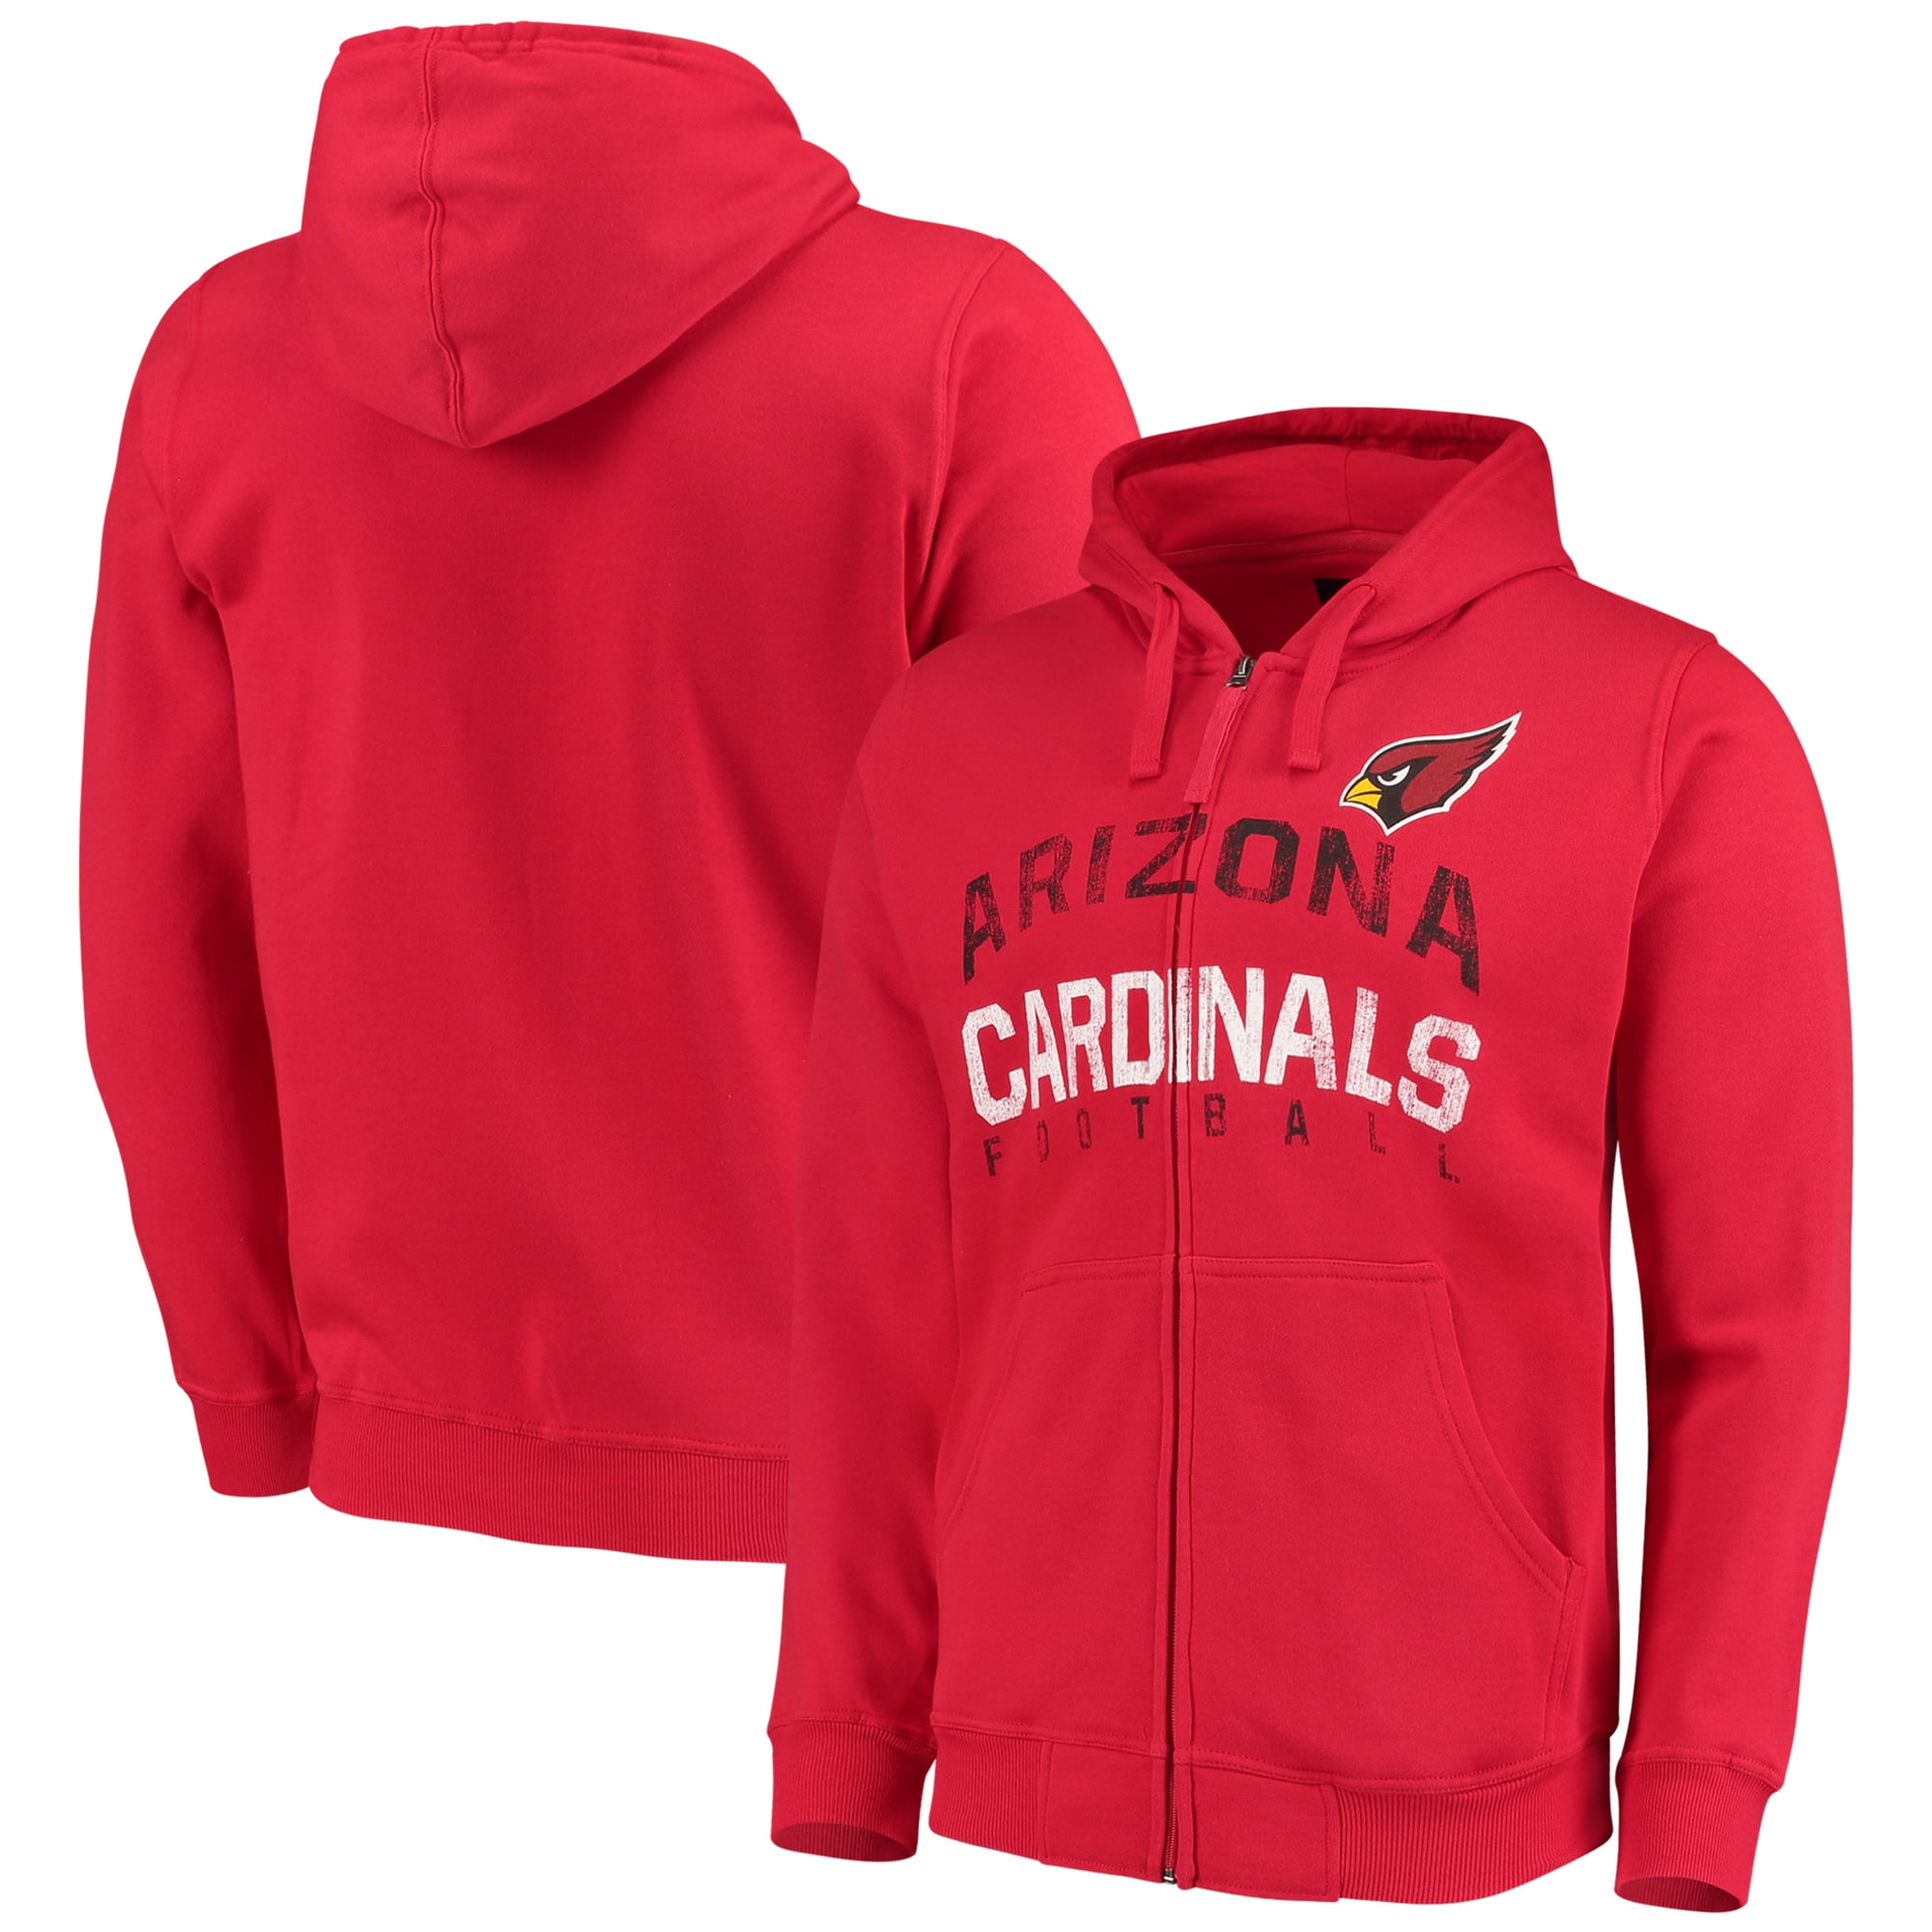 az cardinals zip up hoodie